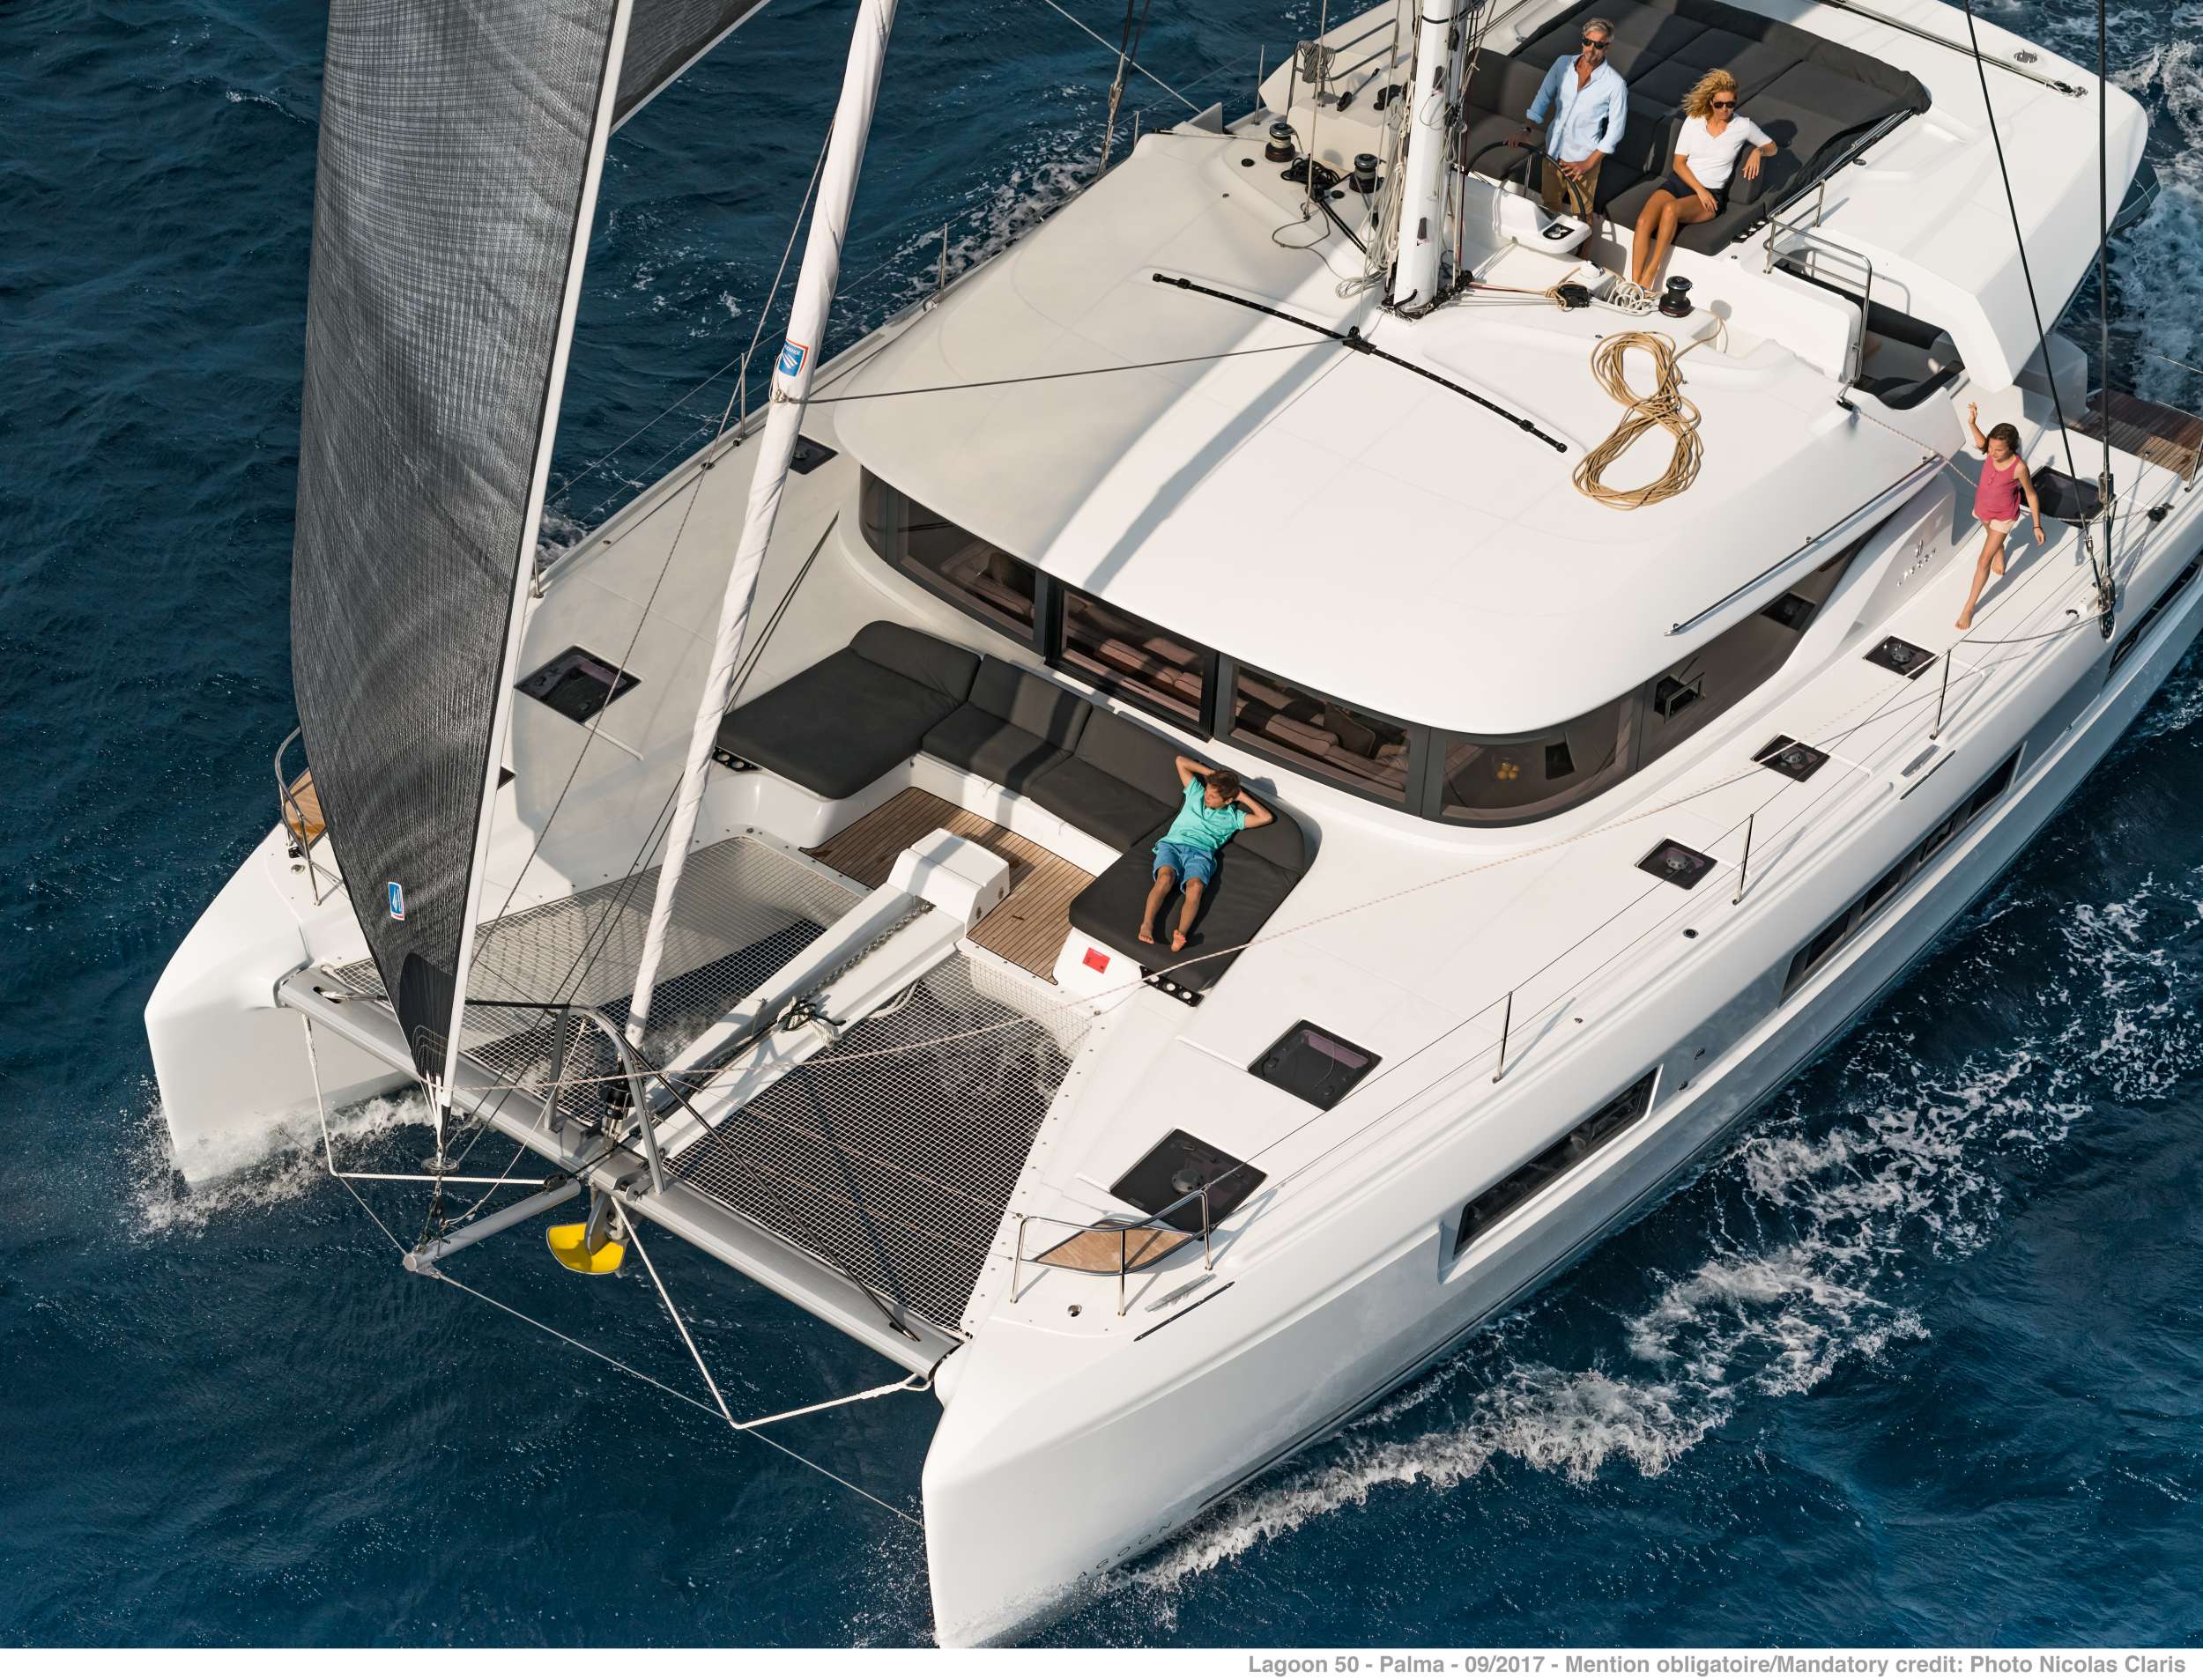 ONEIDA 2 - Yacht Charter Nea Moudania & Boat hire in Greece 6